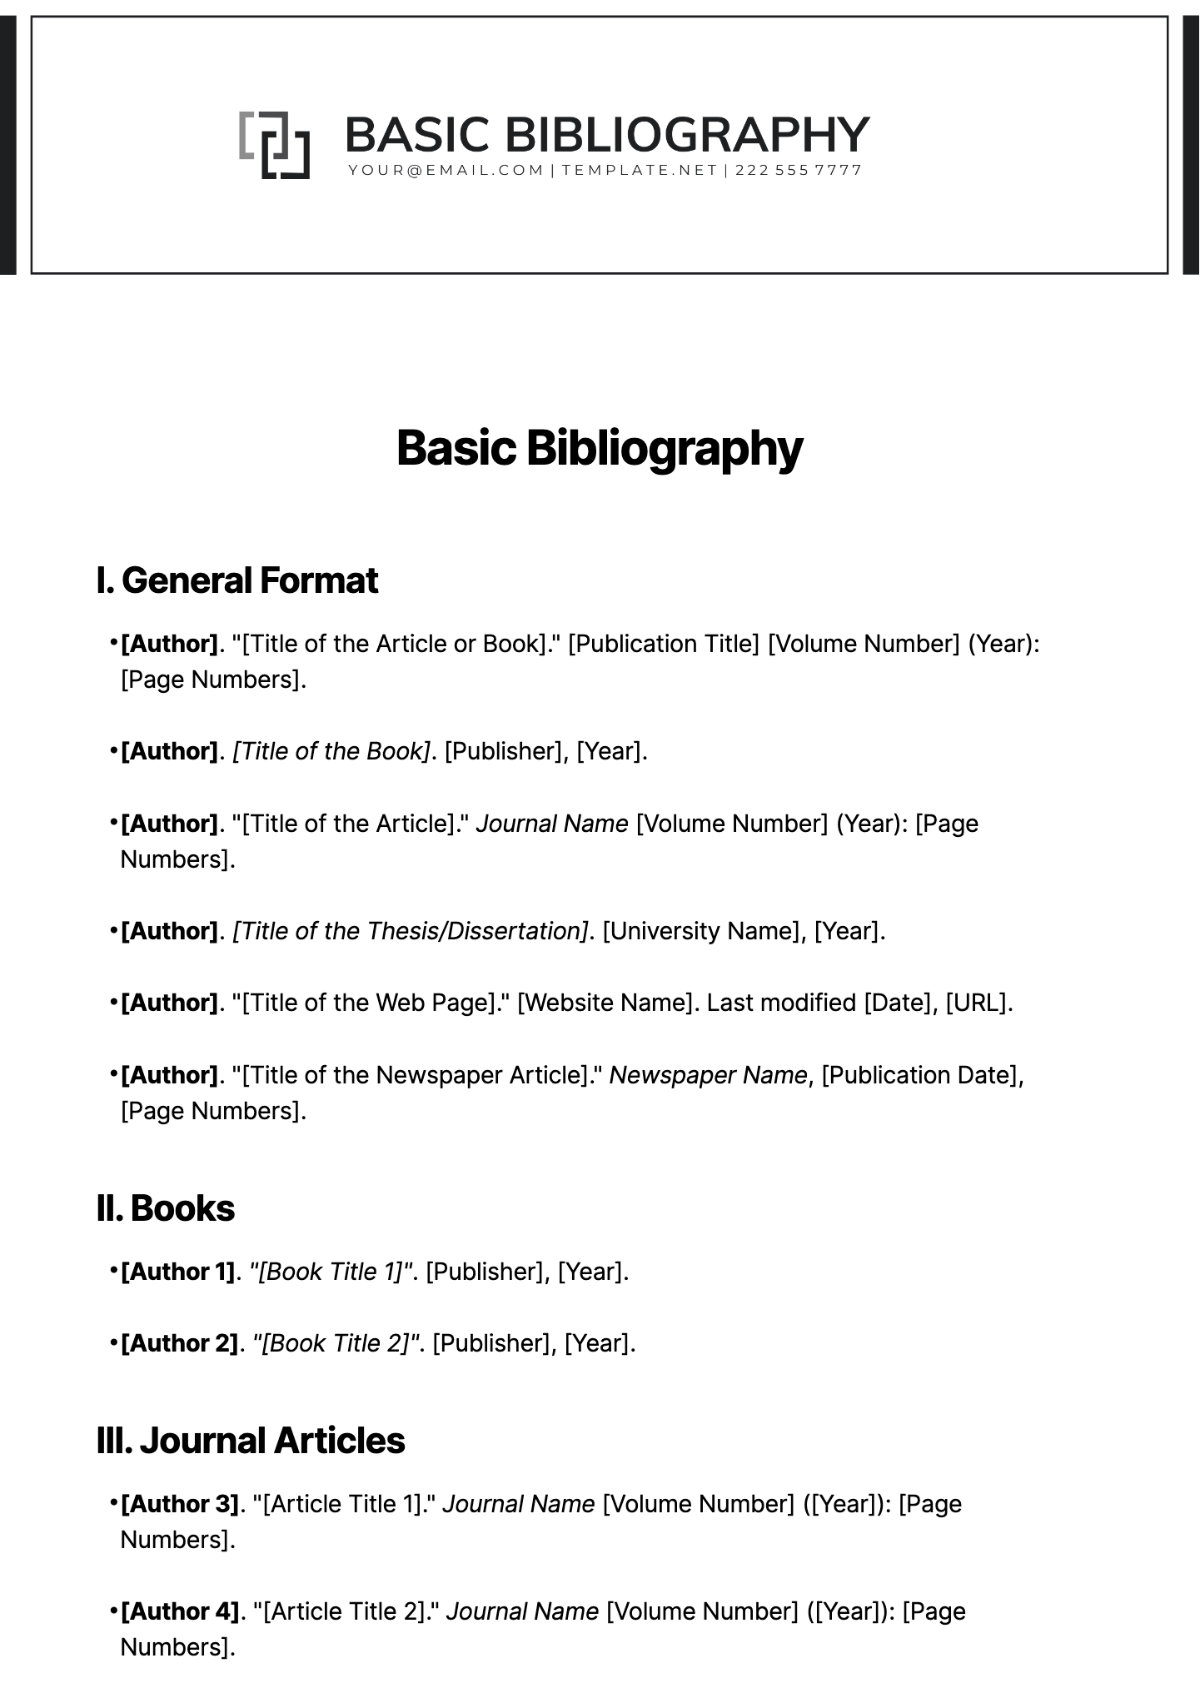 Basic Bibliography Template